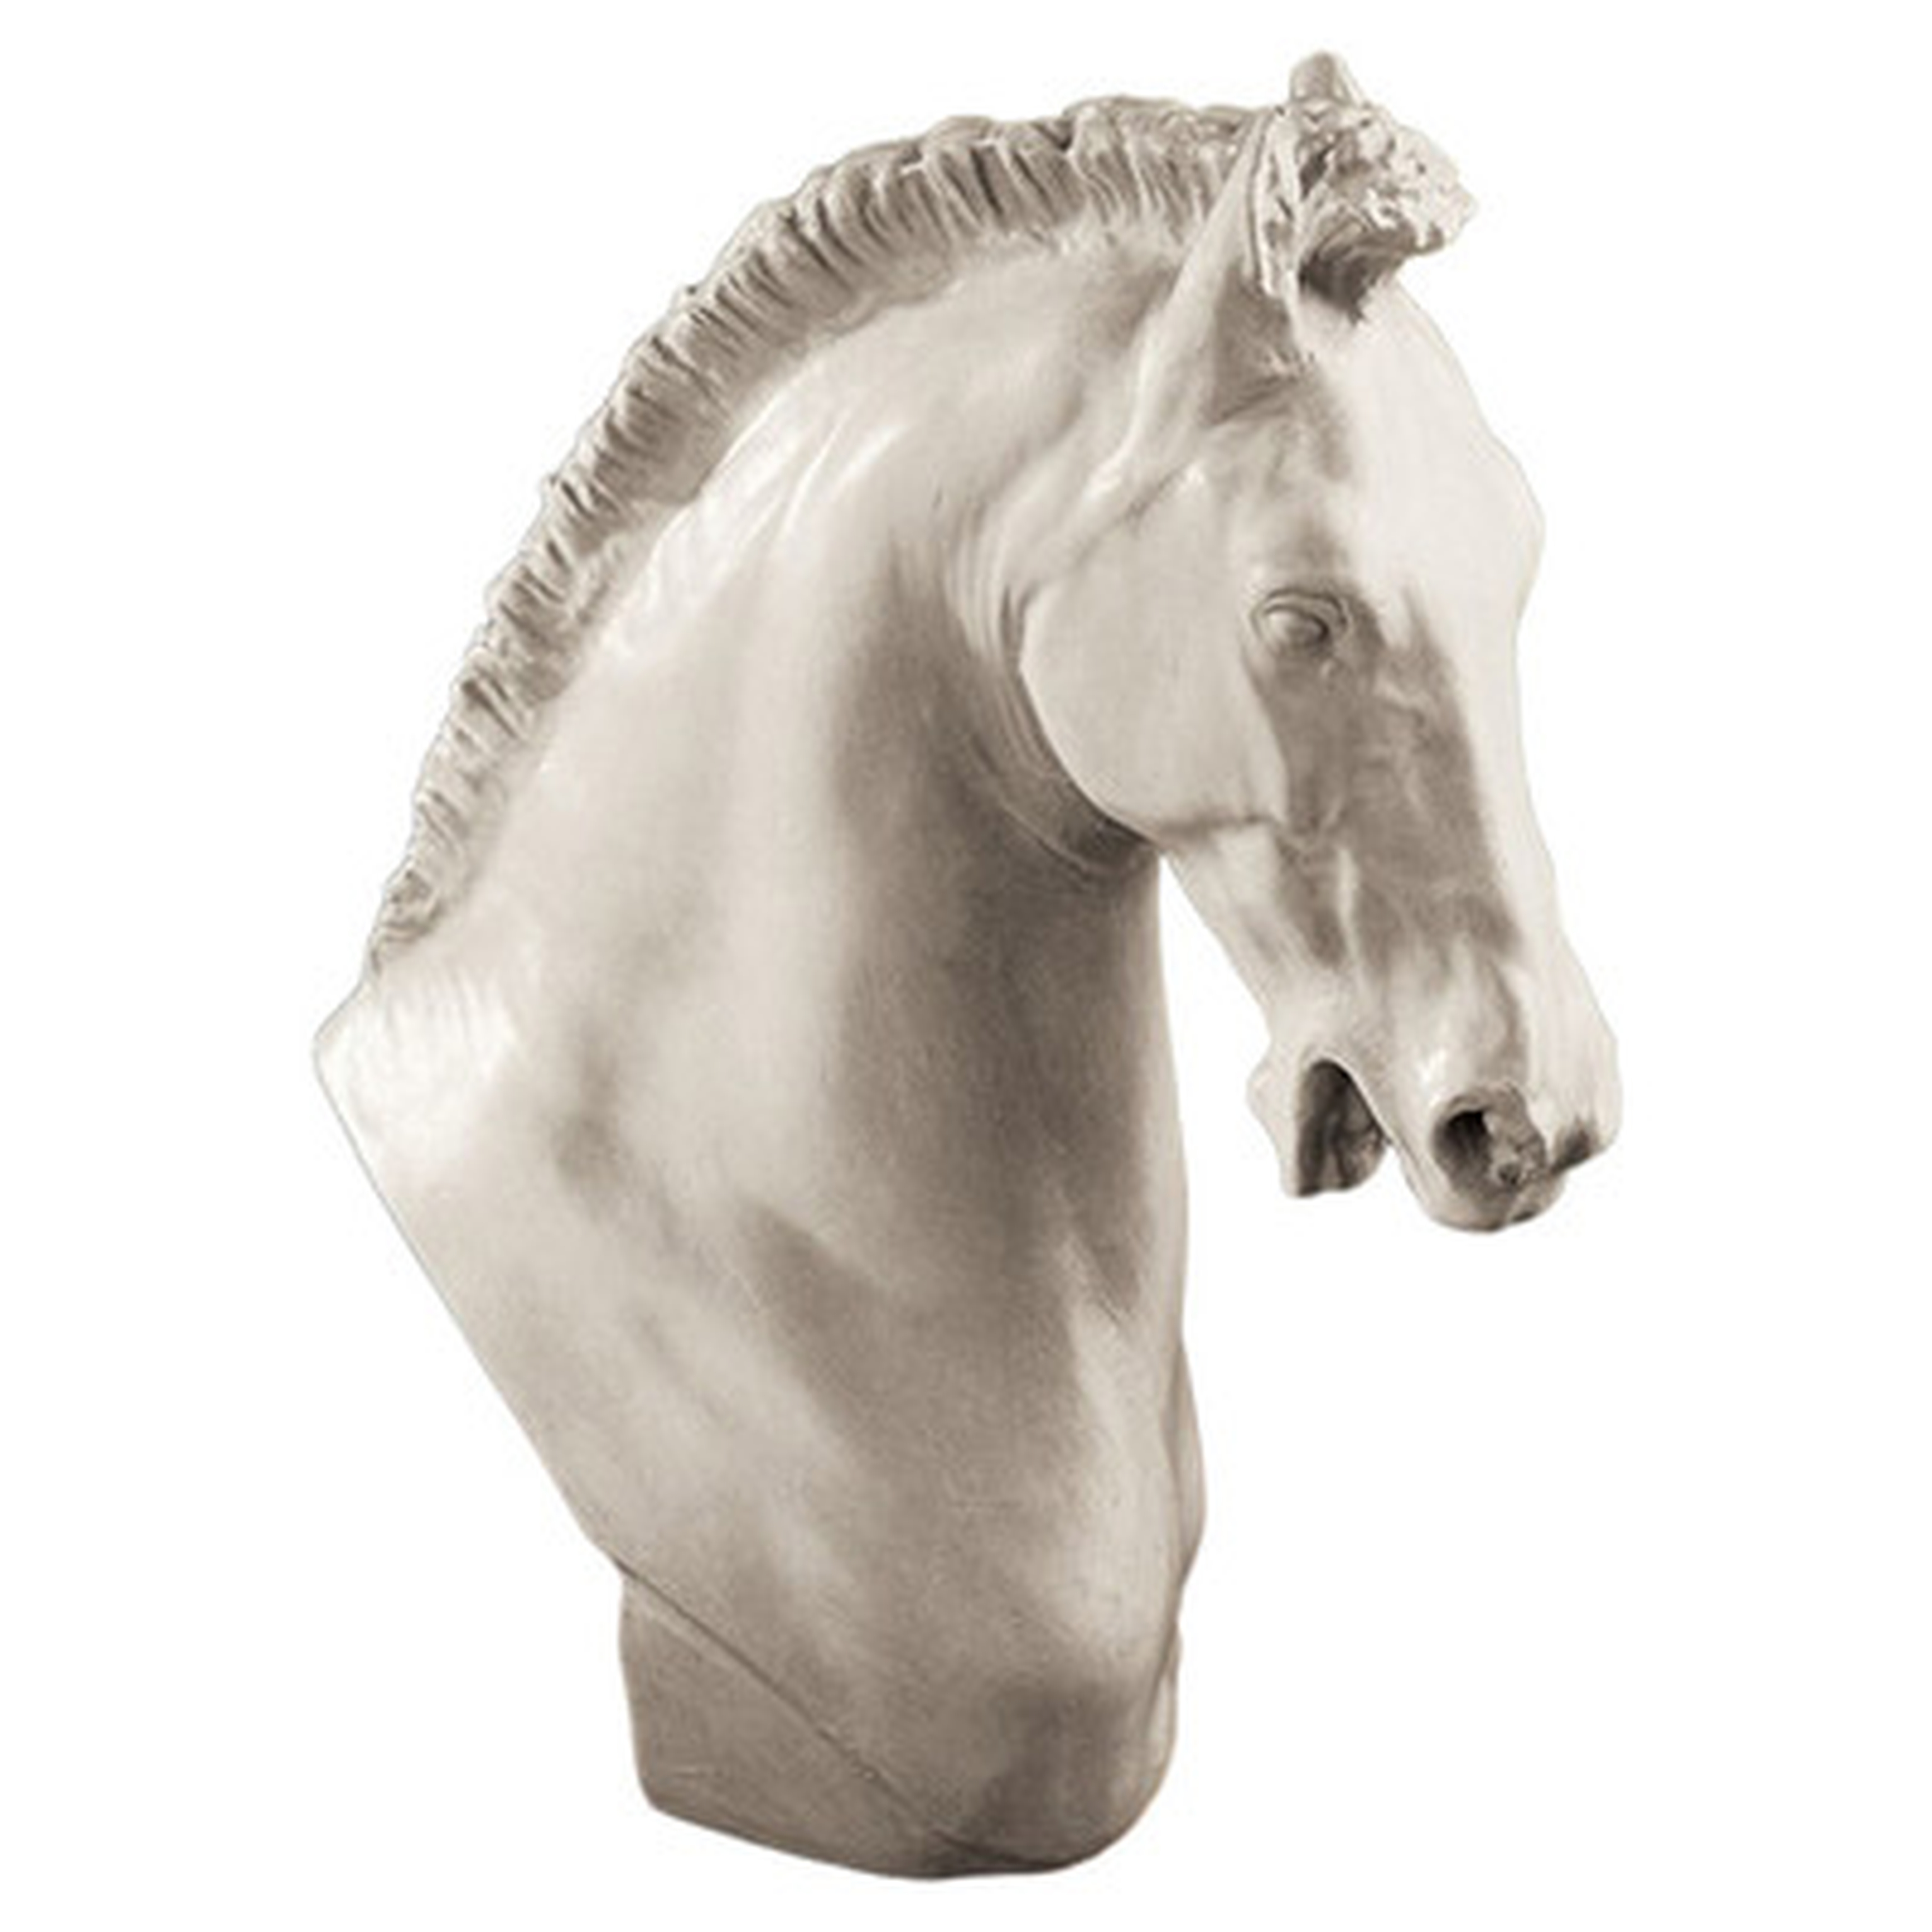 Horse of Turino Bust - Wayfair